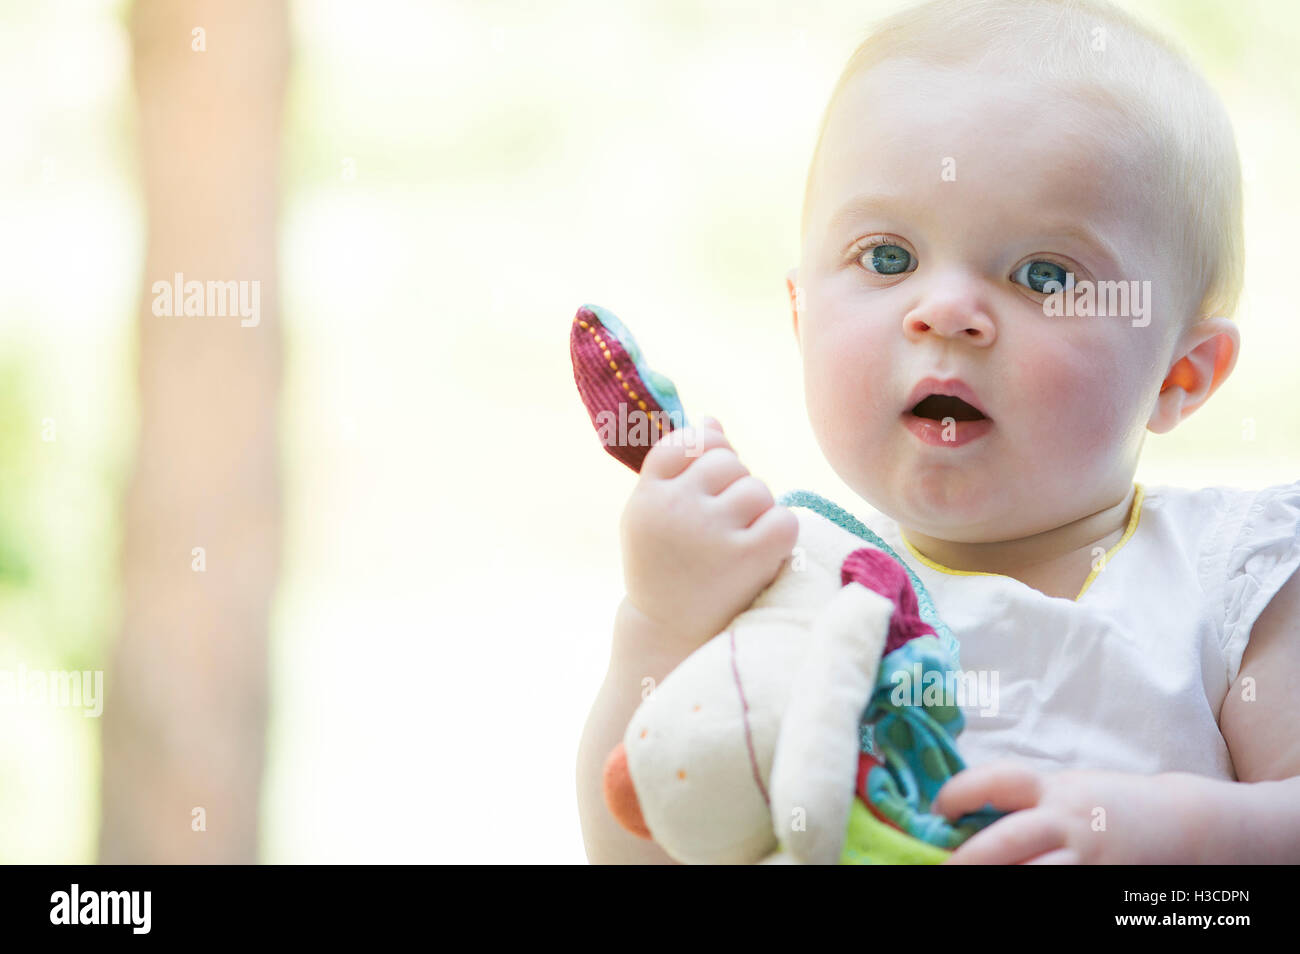 Baby holding stuffed toy, portrait Stock Photo